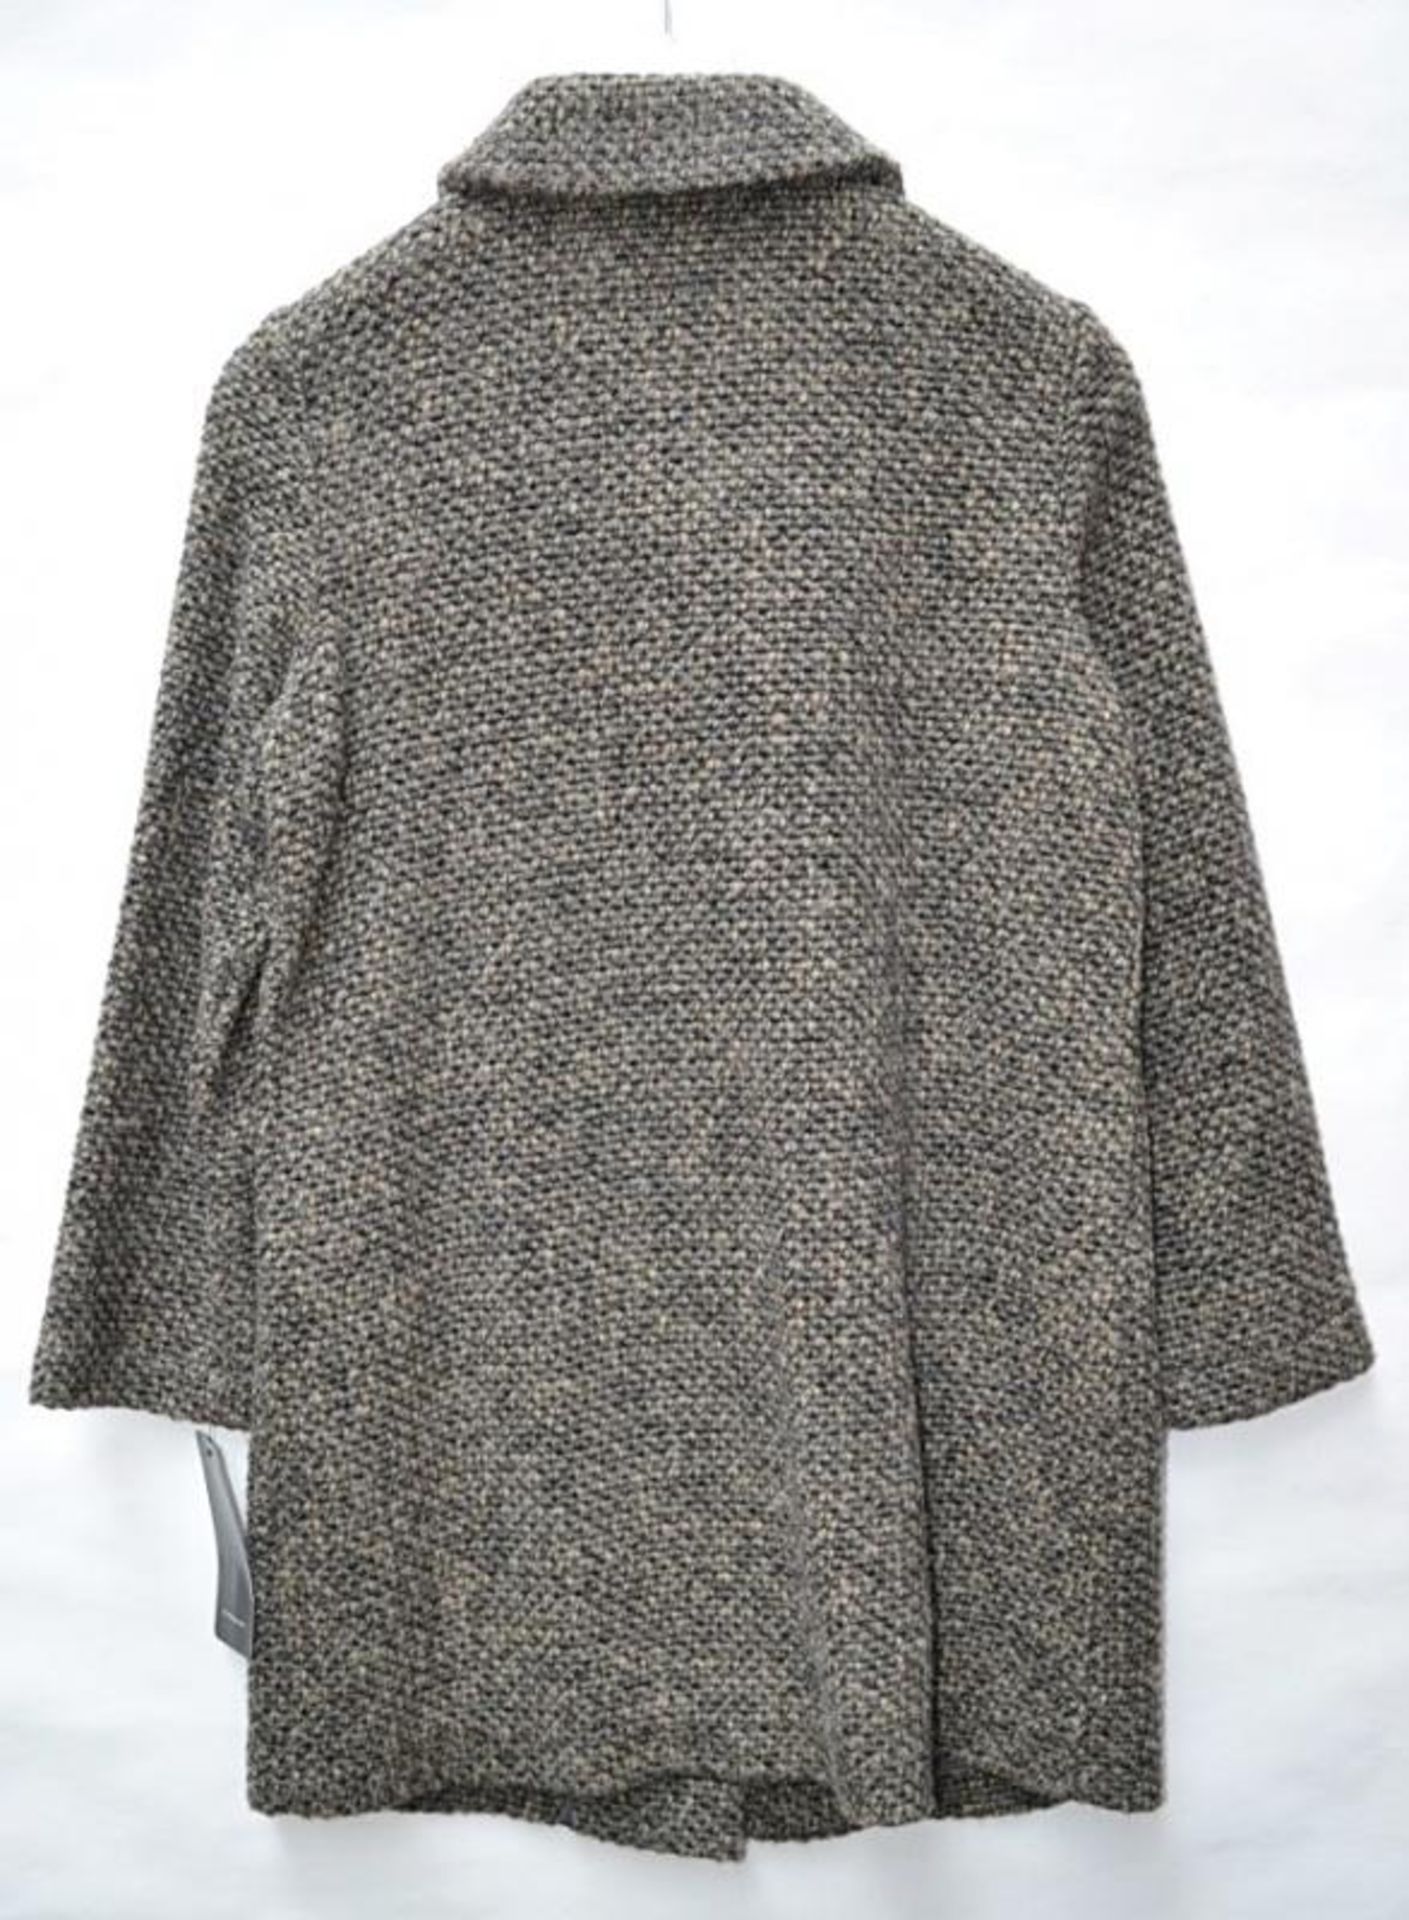 1 x Steilmann Womens Knitted Wool Blend Winter Coat - 87cm Long - Colour: Camel & Metallic Grey - UK - Image 3 of 4